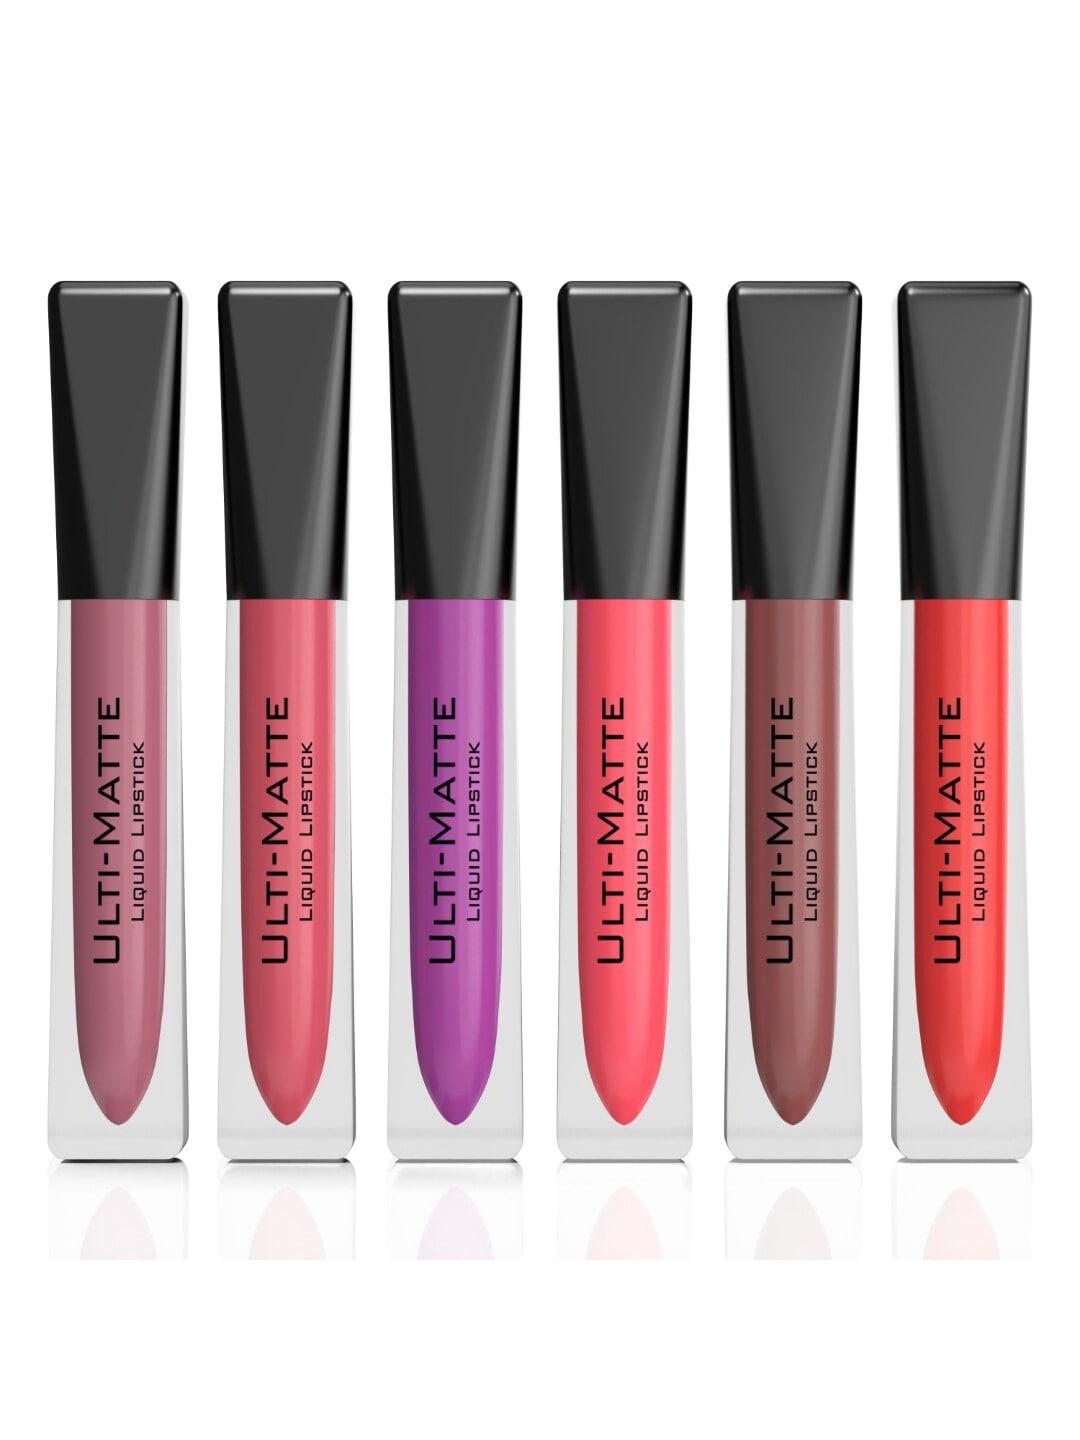 Bella Voste Set of 6 Ulti-Matte Liquid Lipsticks 3.7ml Each - Shade 01, 02, 07, 08, 13, 14